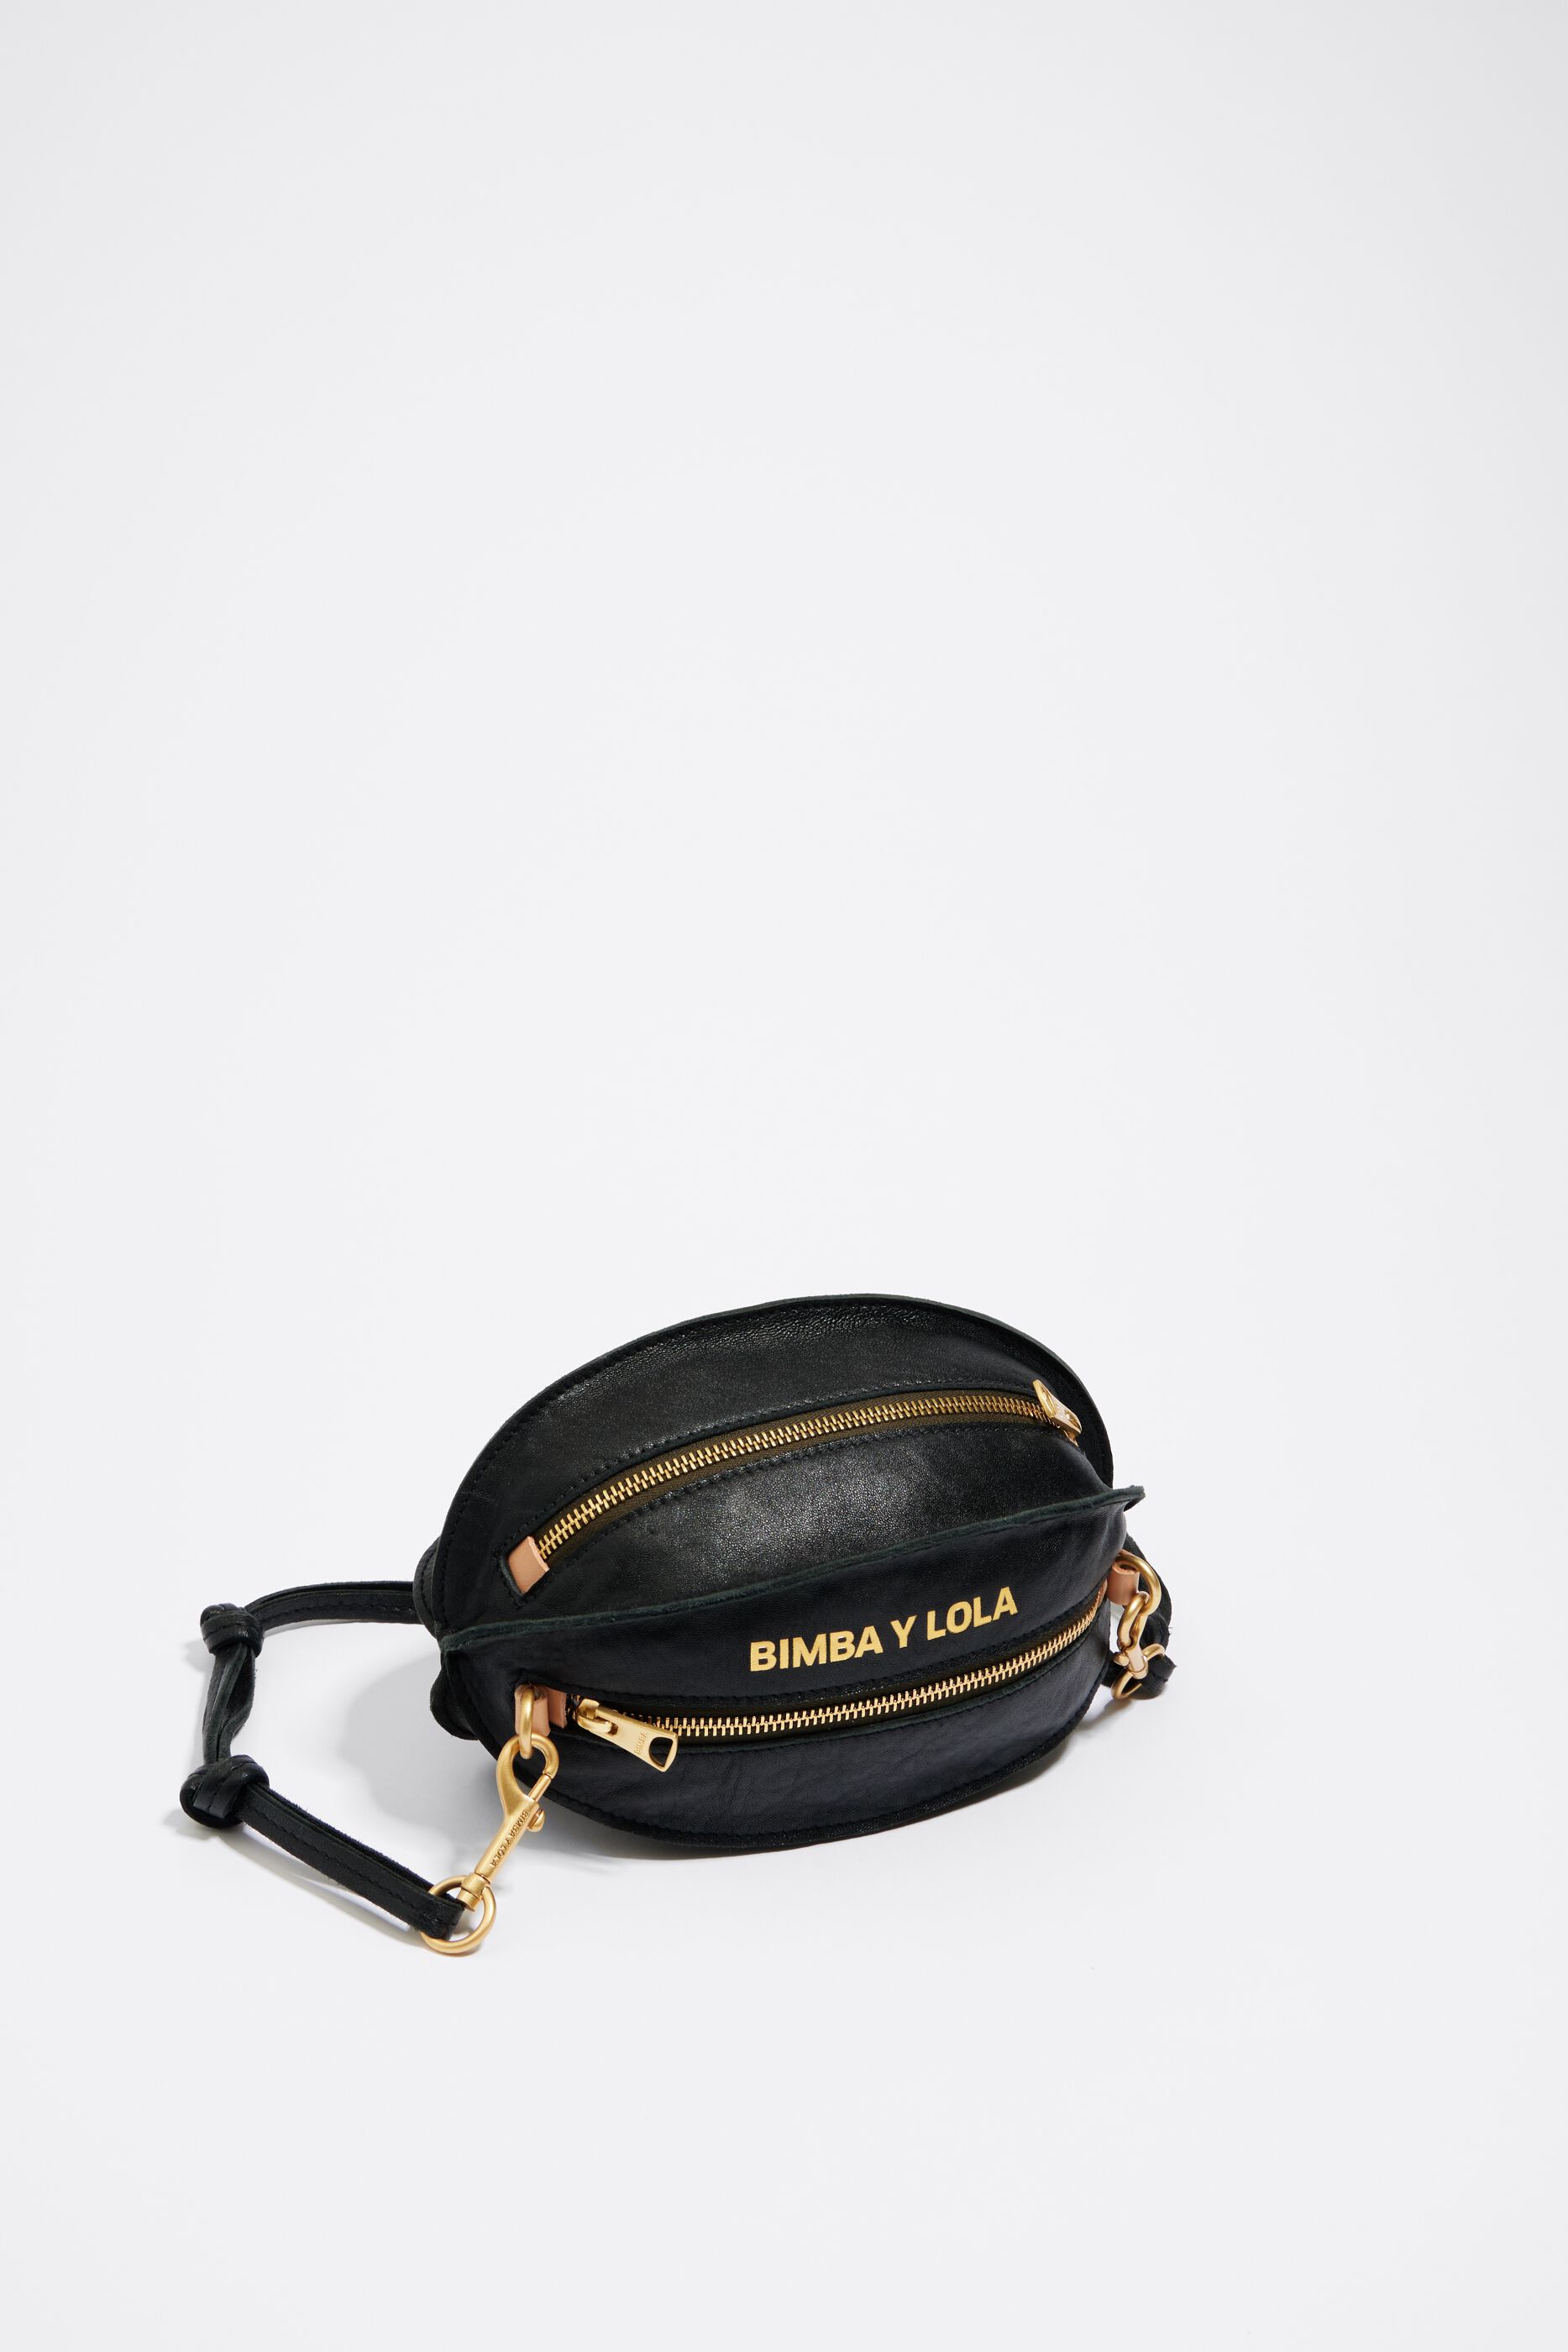 Bimba and Lola leather chain tote bag purse (PU220 | eBay